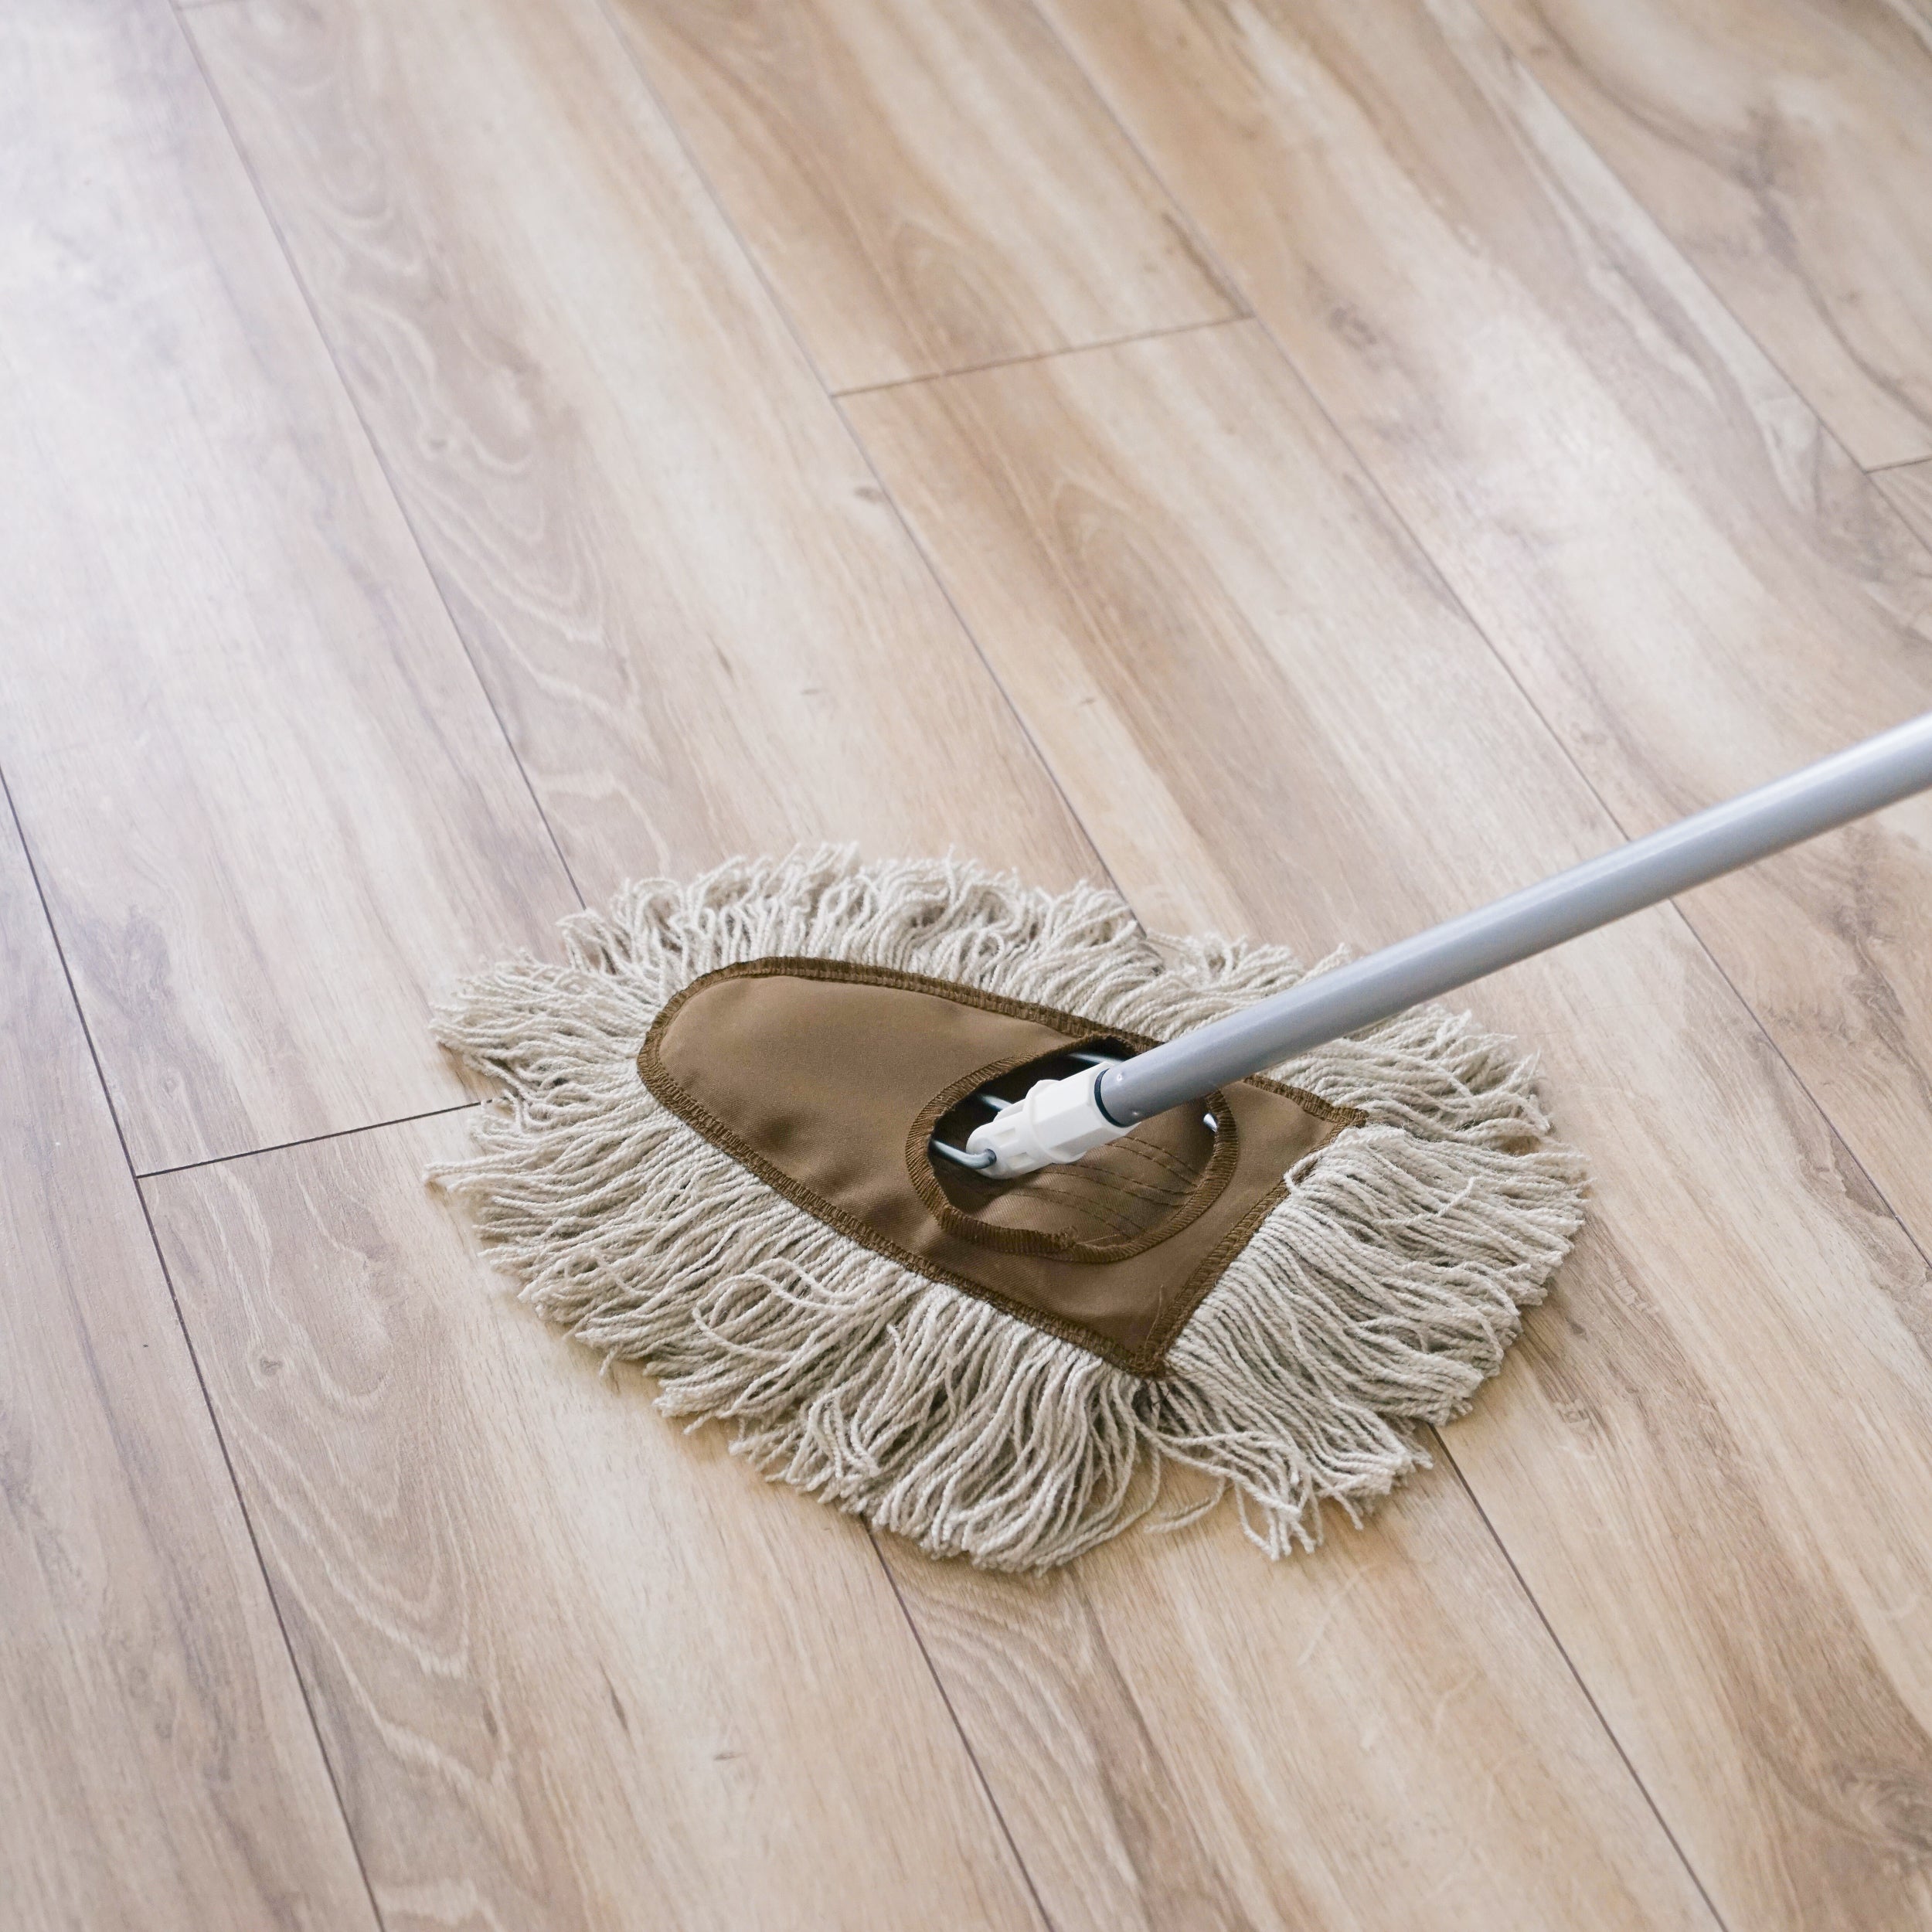 Soft Plastic Head Adjustable Floor Cleaning Brush Long Handle Floor